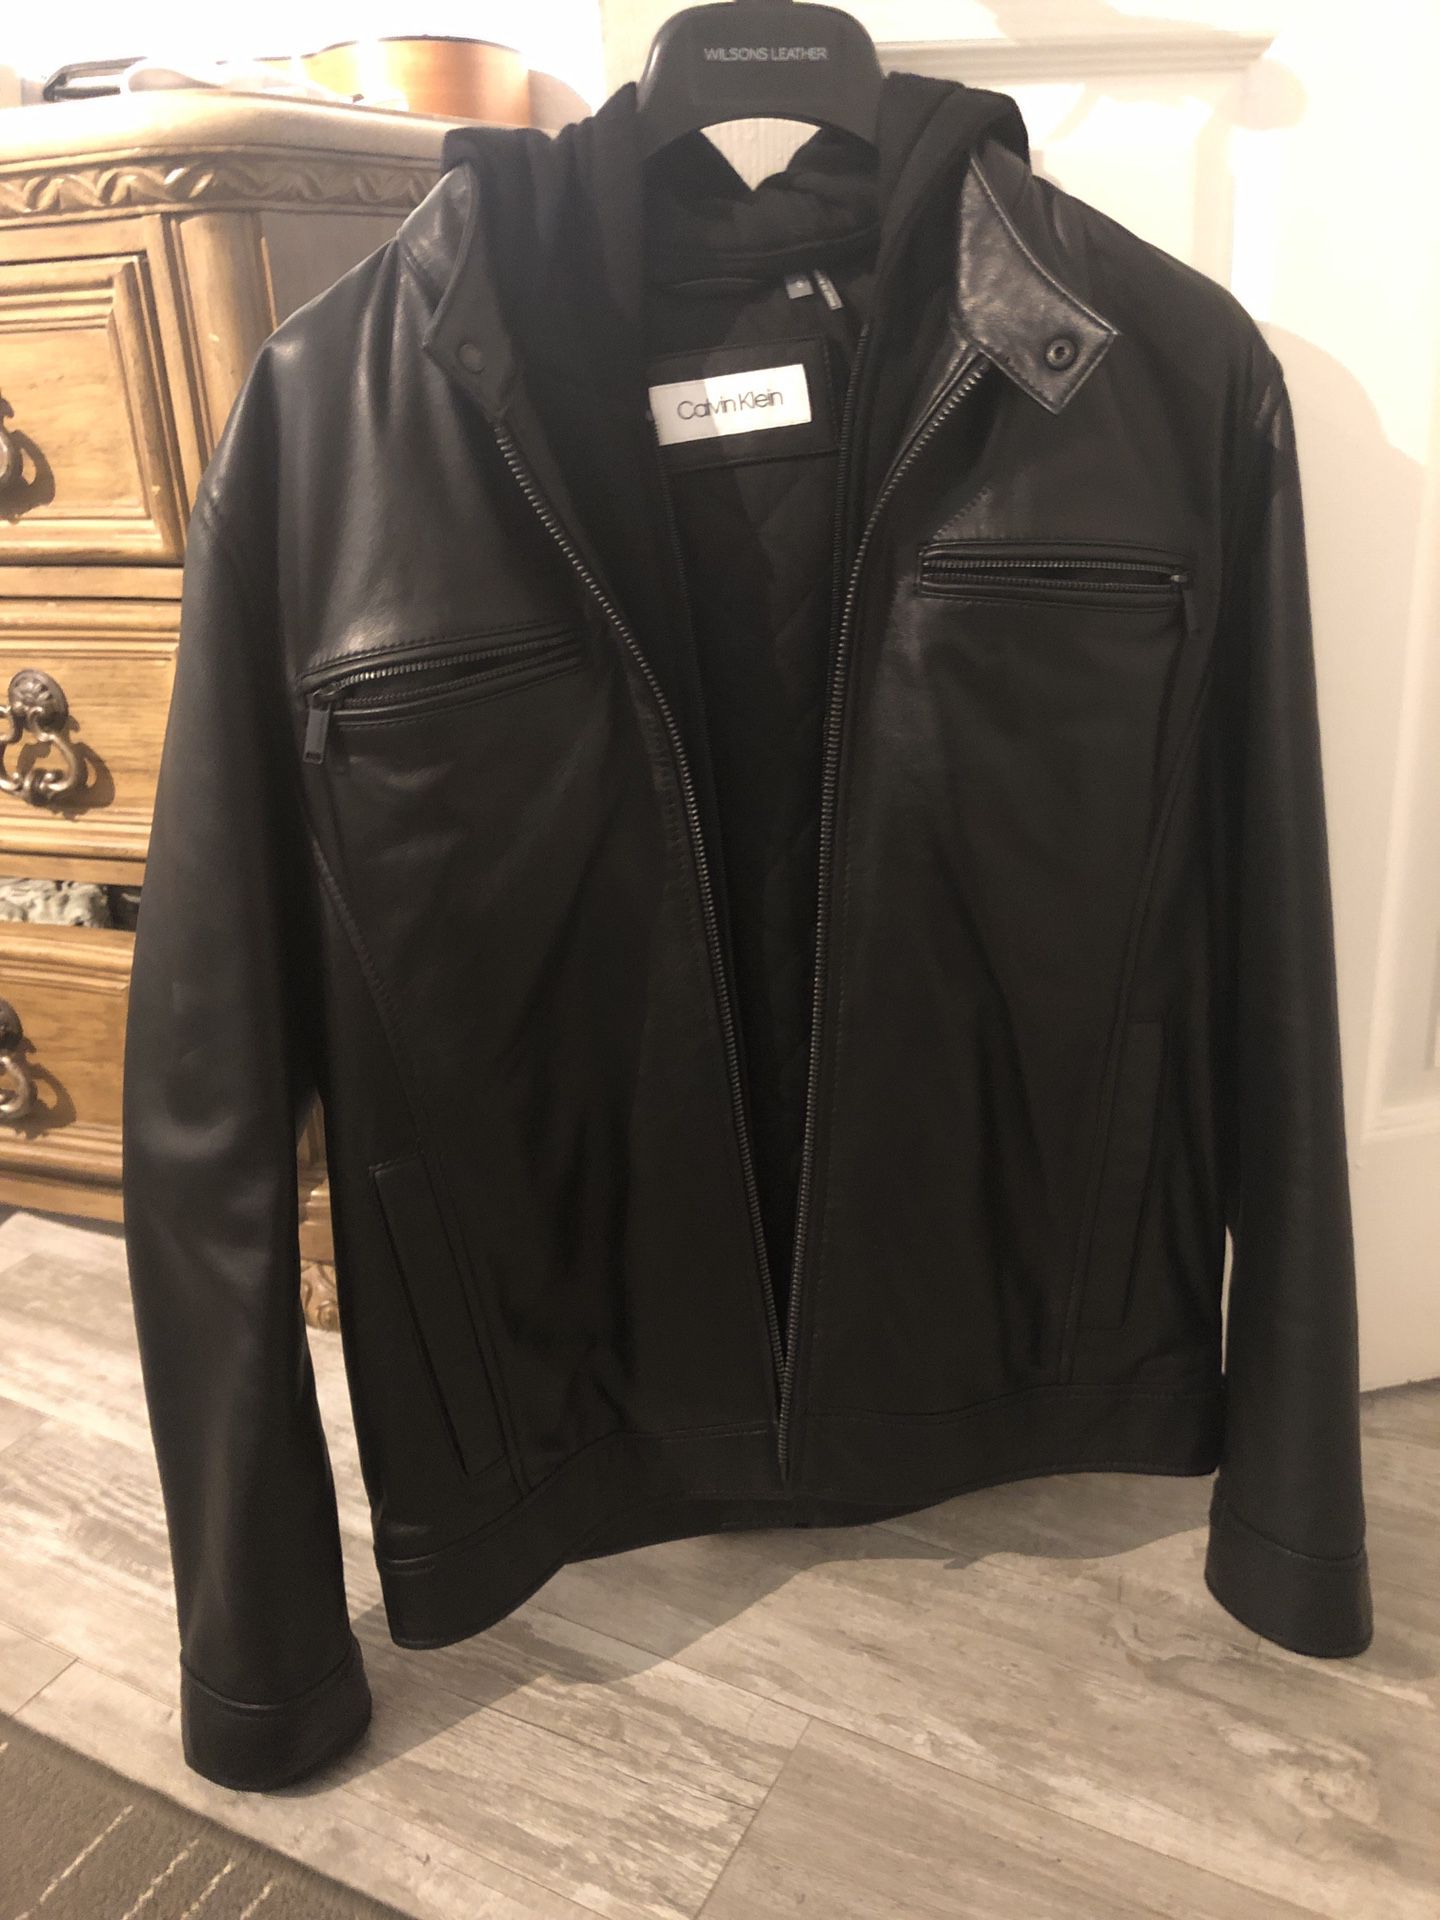 Calvin Klein lamb skin leather jacket size small